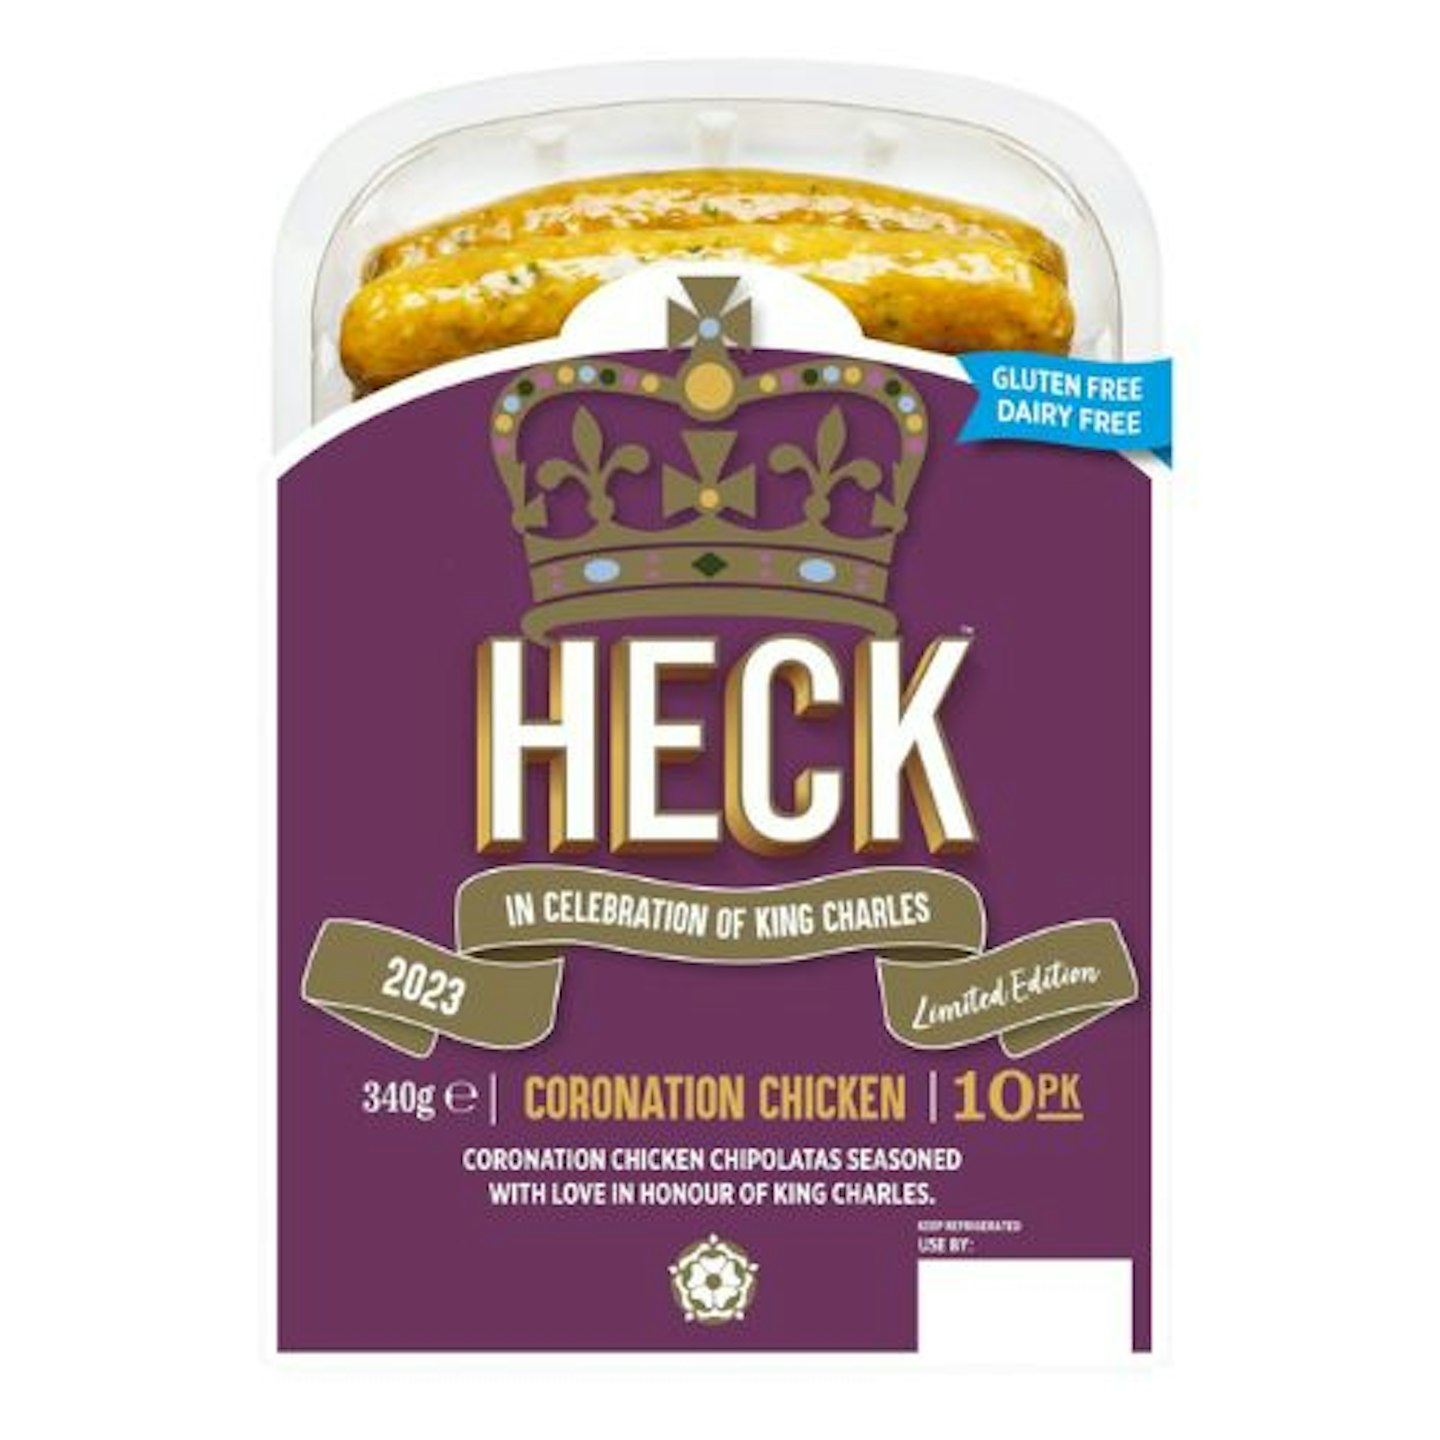 HECK Coronation Chicken Chipolatas